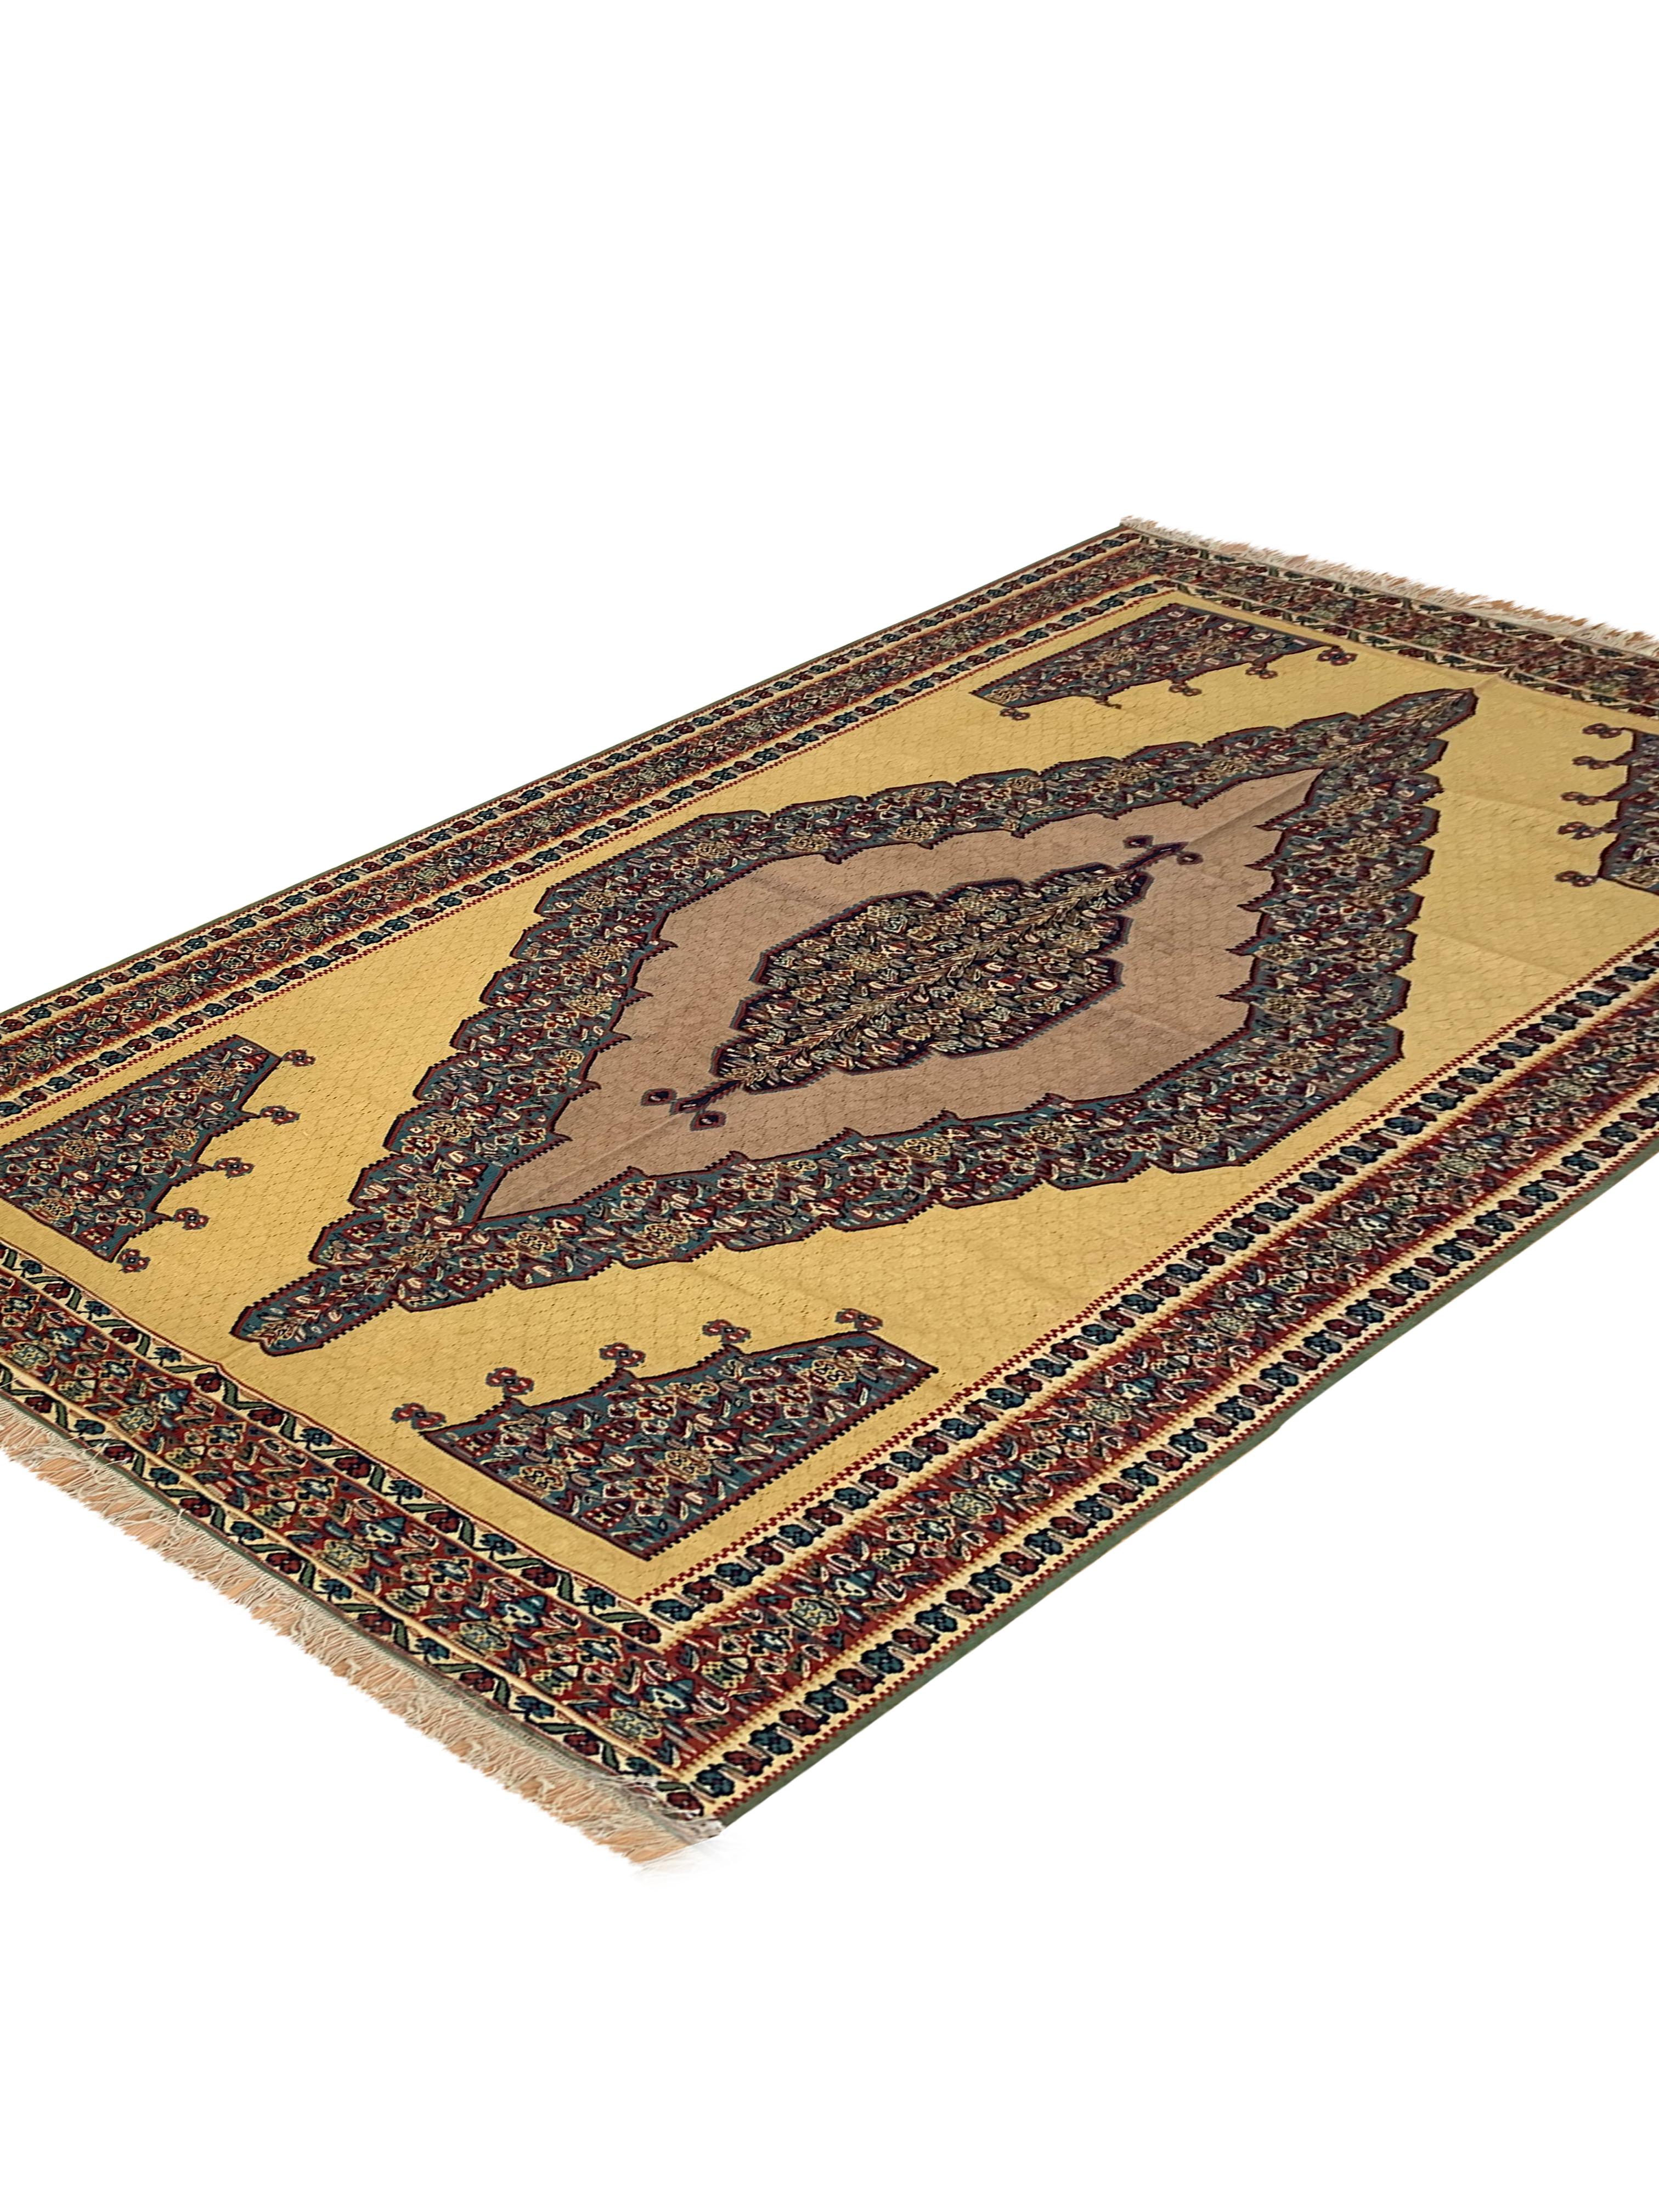 Iraqi Handmade Carpet Oriental Medallion Kilim Yellow Living Area Rug For Sale